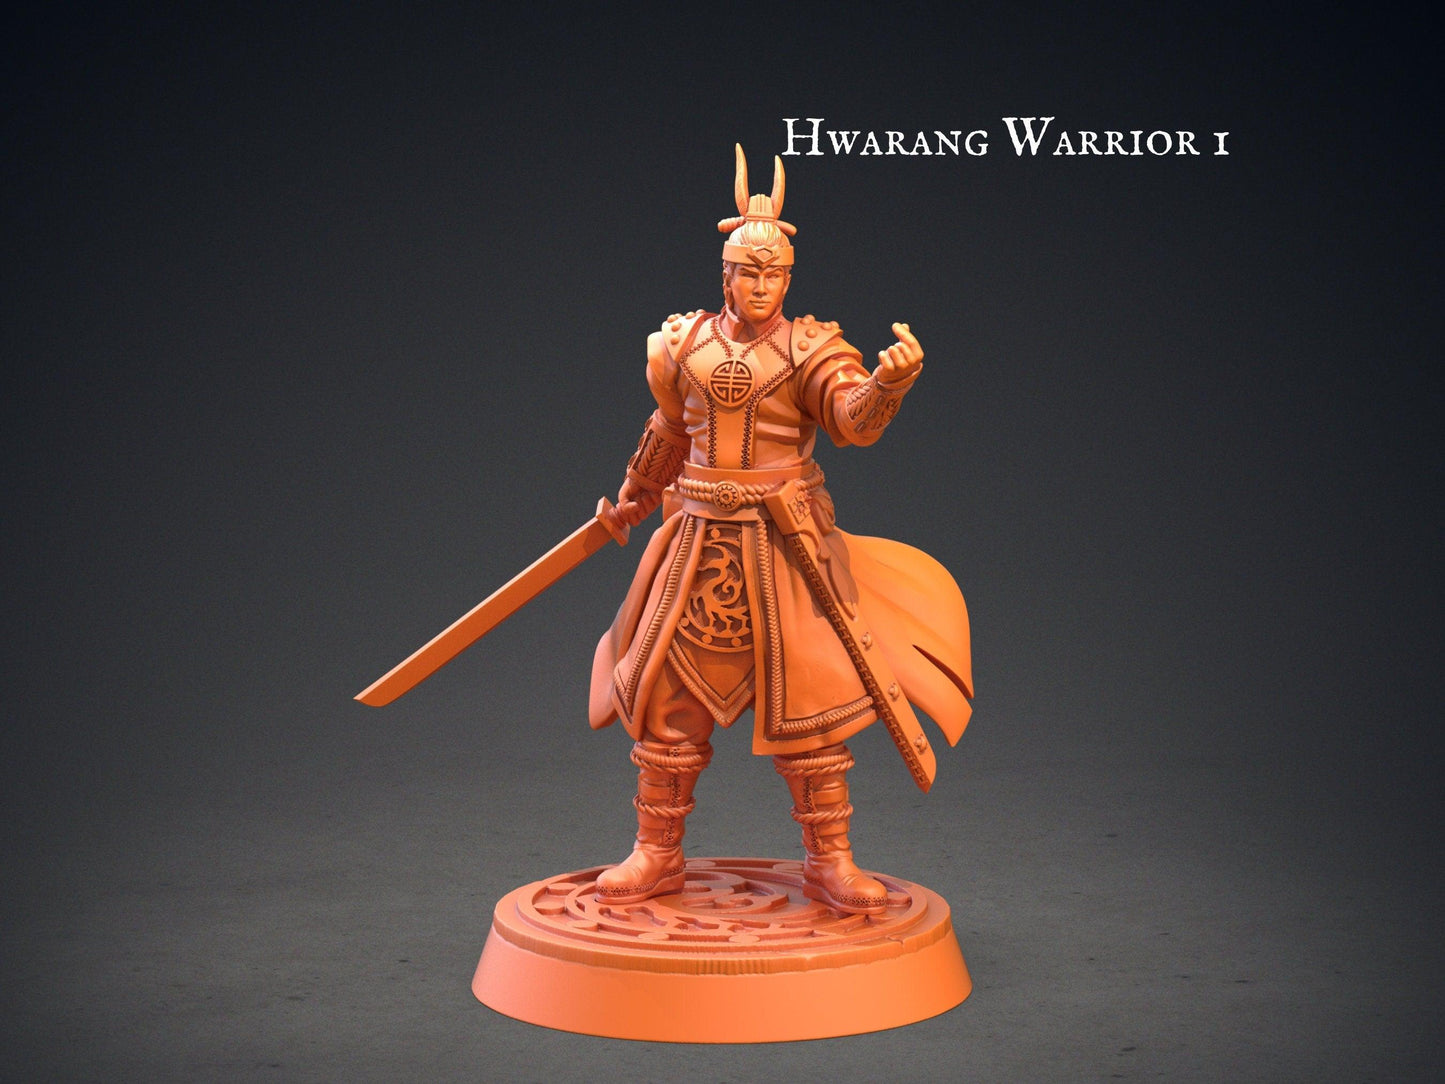 Hwarang Warrior miniature | Clay Cyanide | Korean Mythology | Tabletop Gaming | DnD Miniature | Dungeons and Dragons | Korean Warriors mini - Plague Miniatures shop for DnD Miniatures